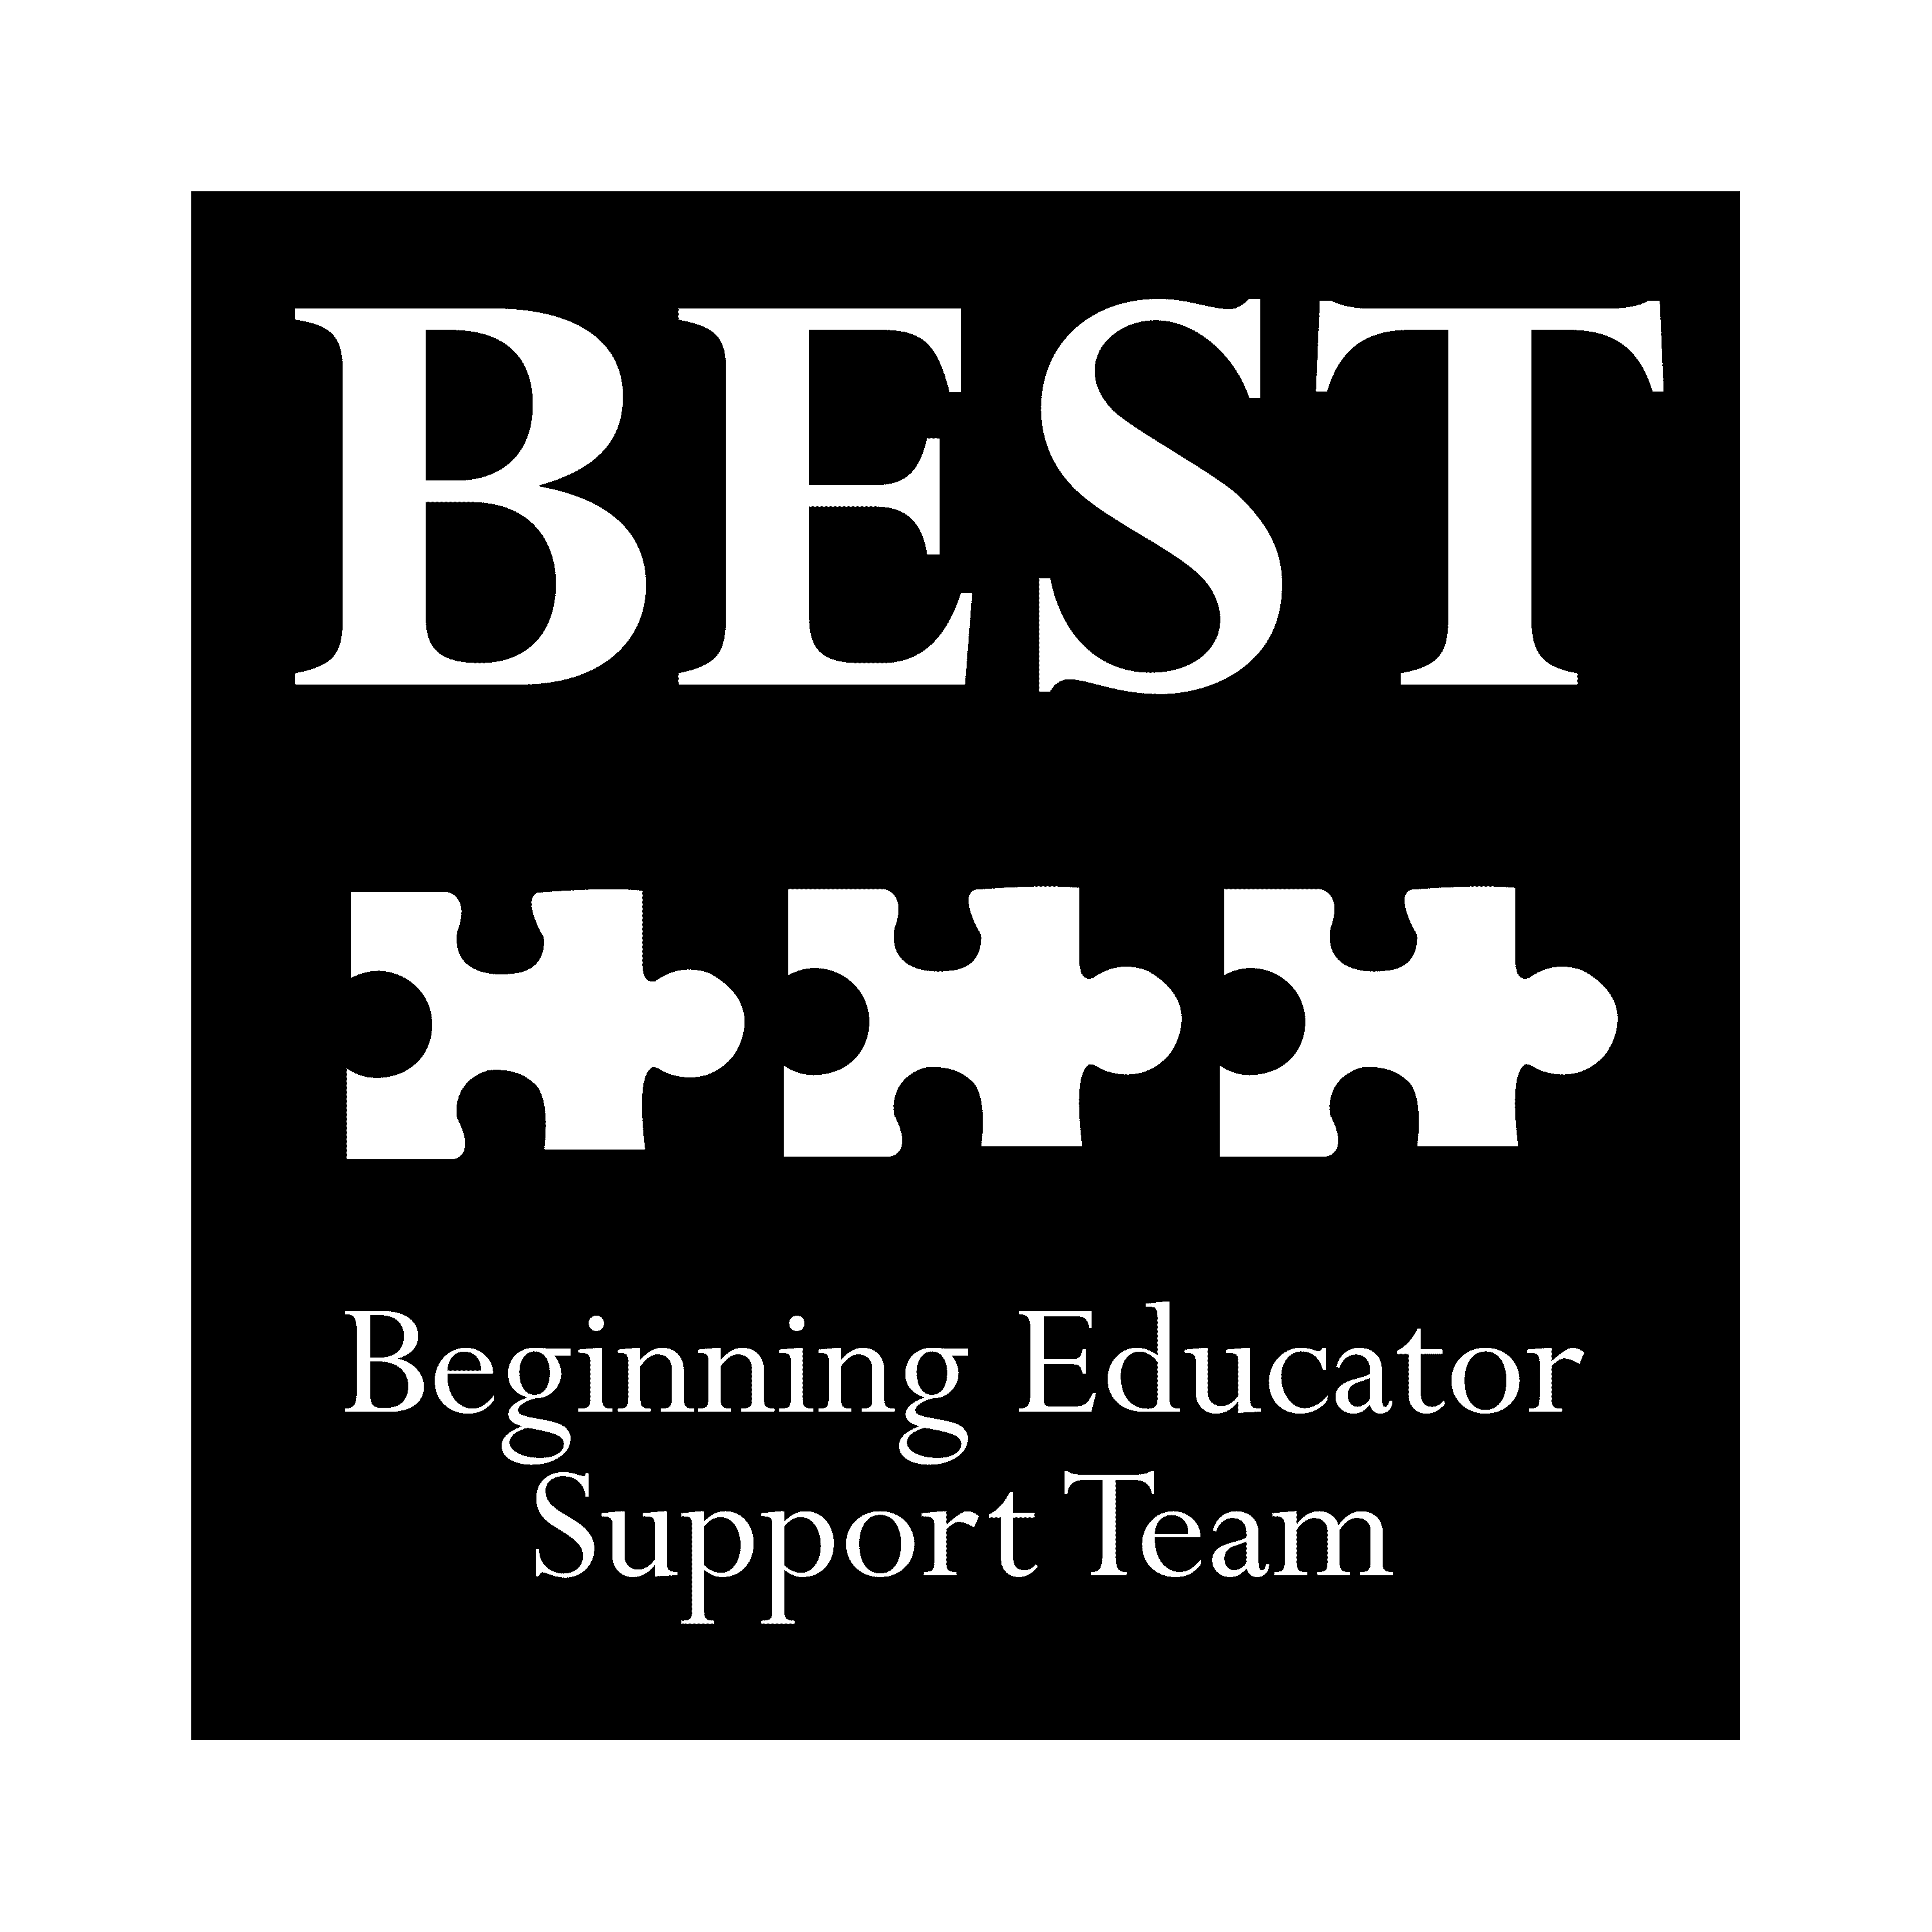  BEST BEGINNING EDUCATOR SUPPORT TEAM